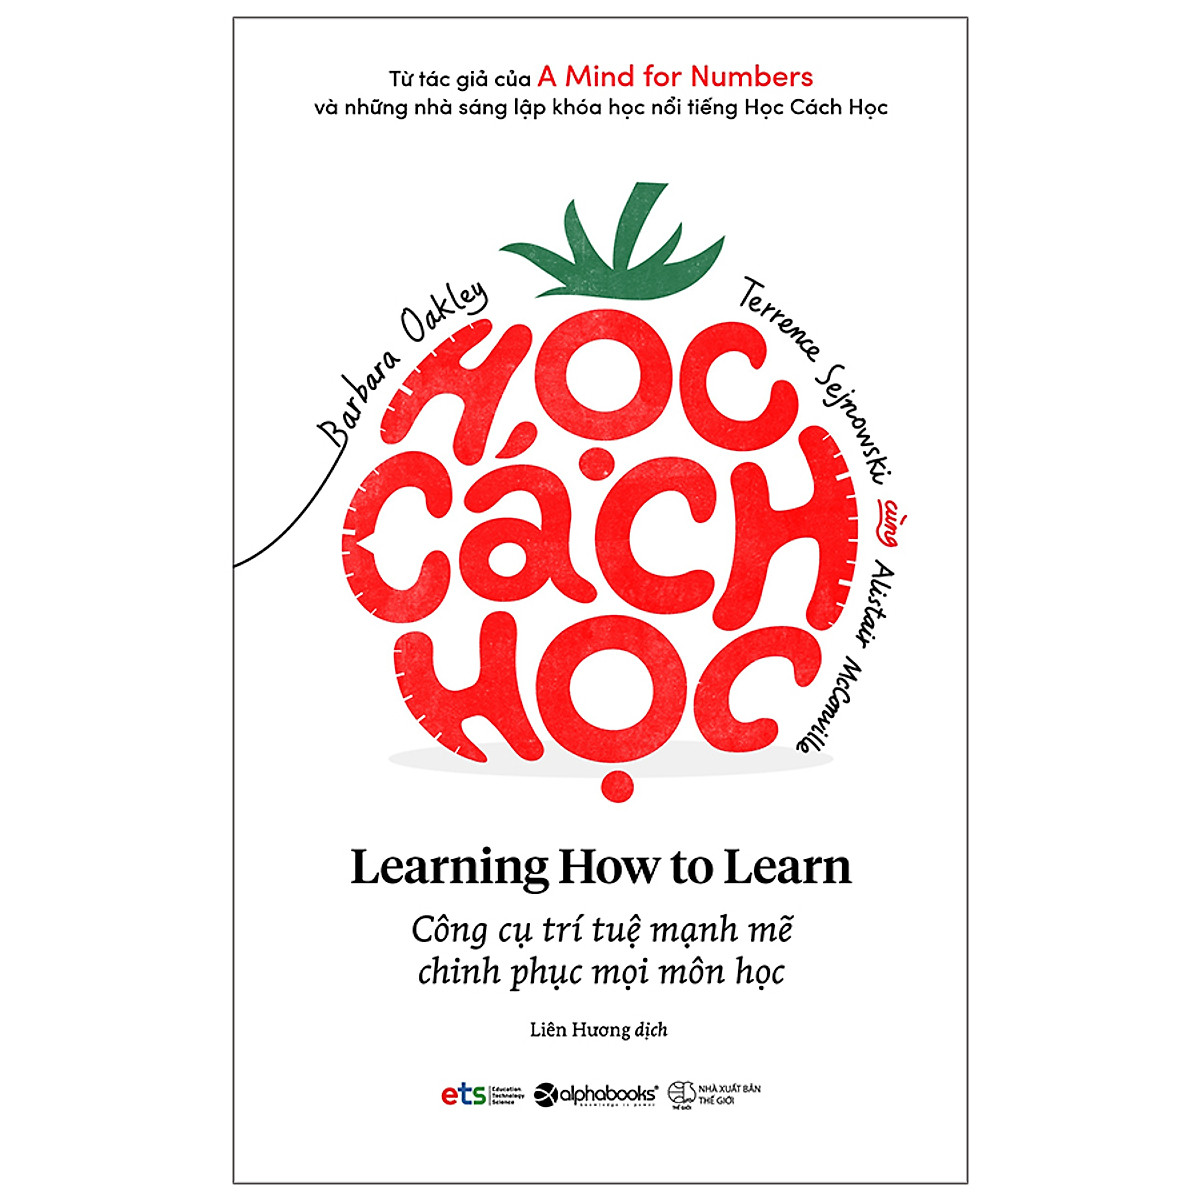 Cuon sach Hoc Cach Hoc - Tải sách Học Cách Học - Download Ebook Free PDF